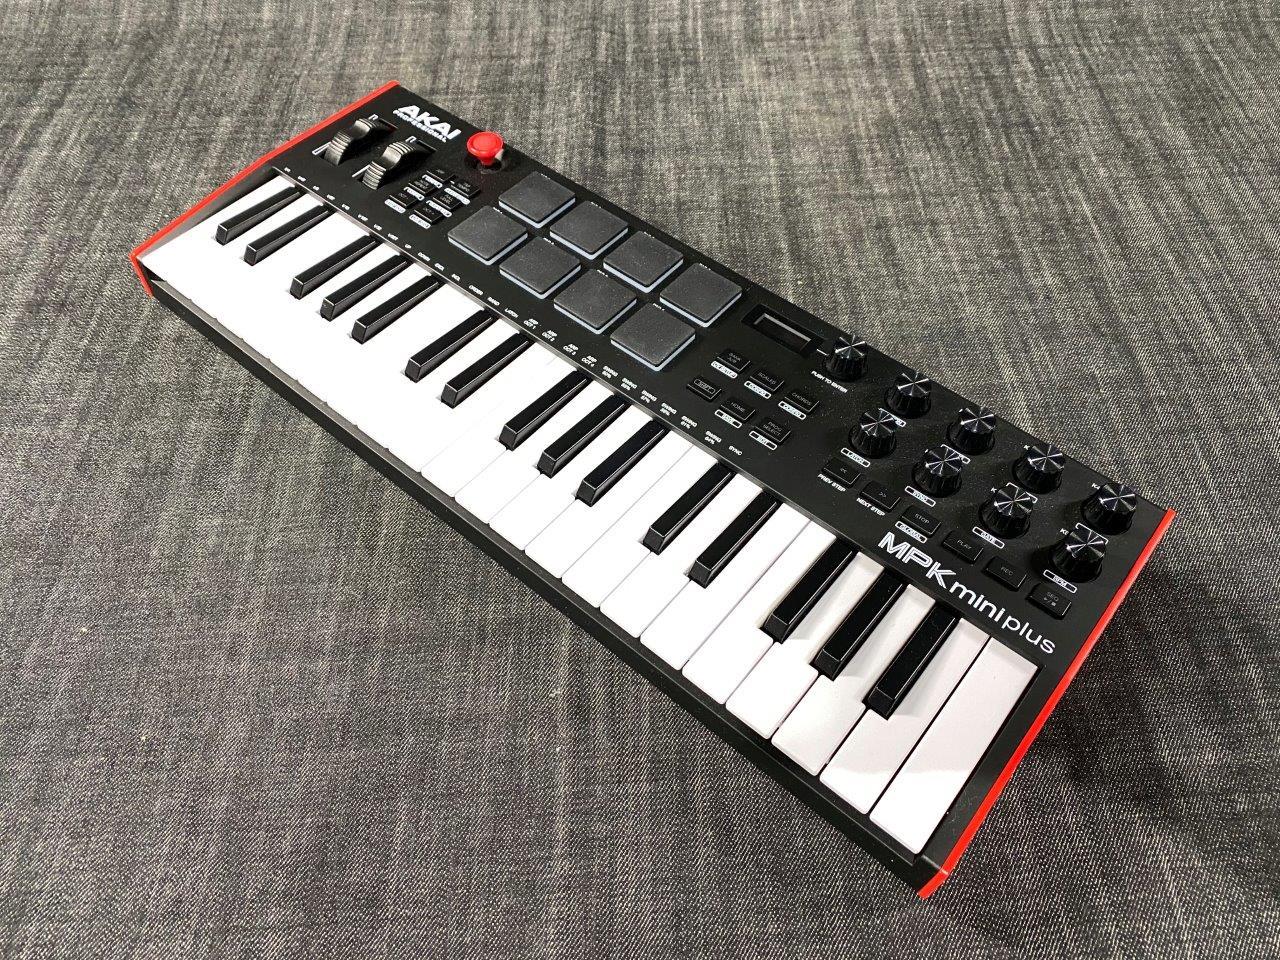 AKAI ( アカイ ) MPK mini Plus MIDIキーボード-